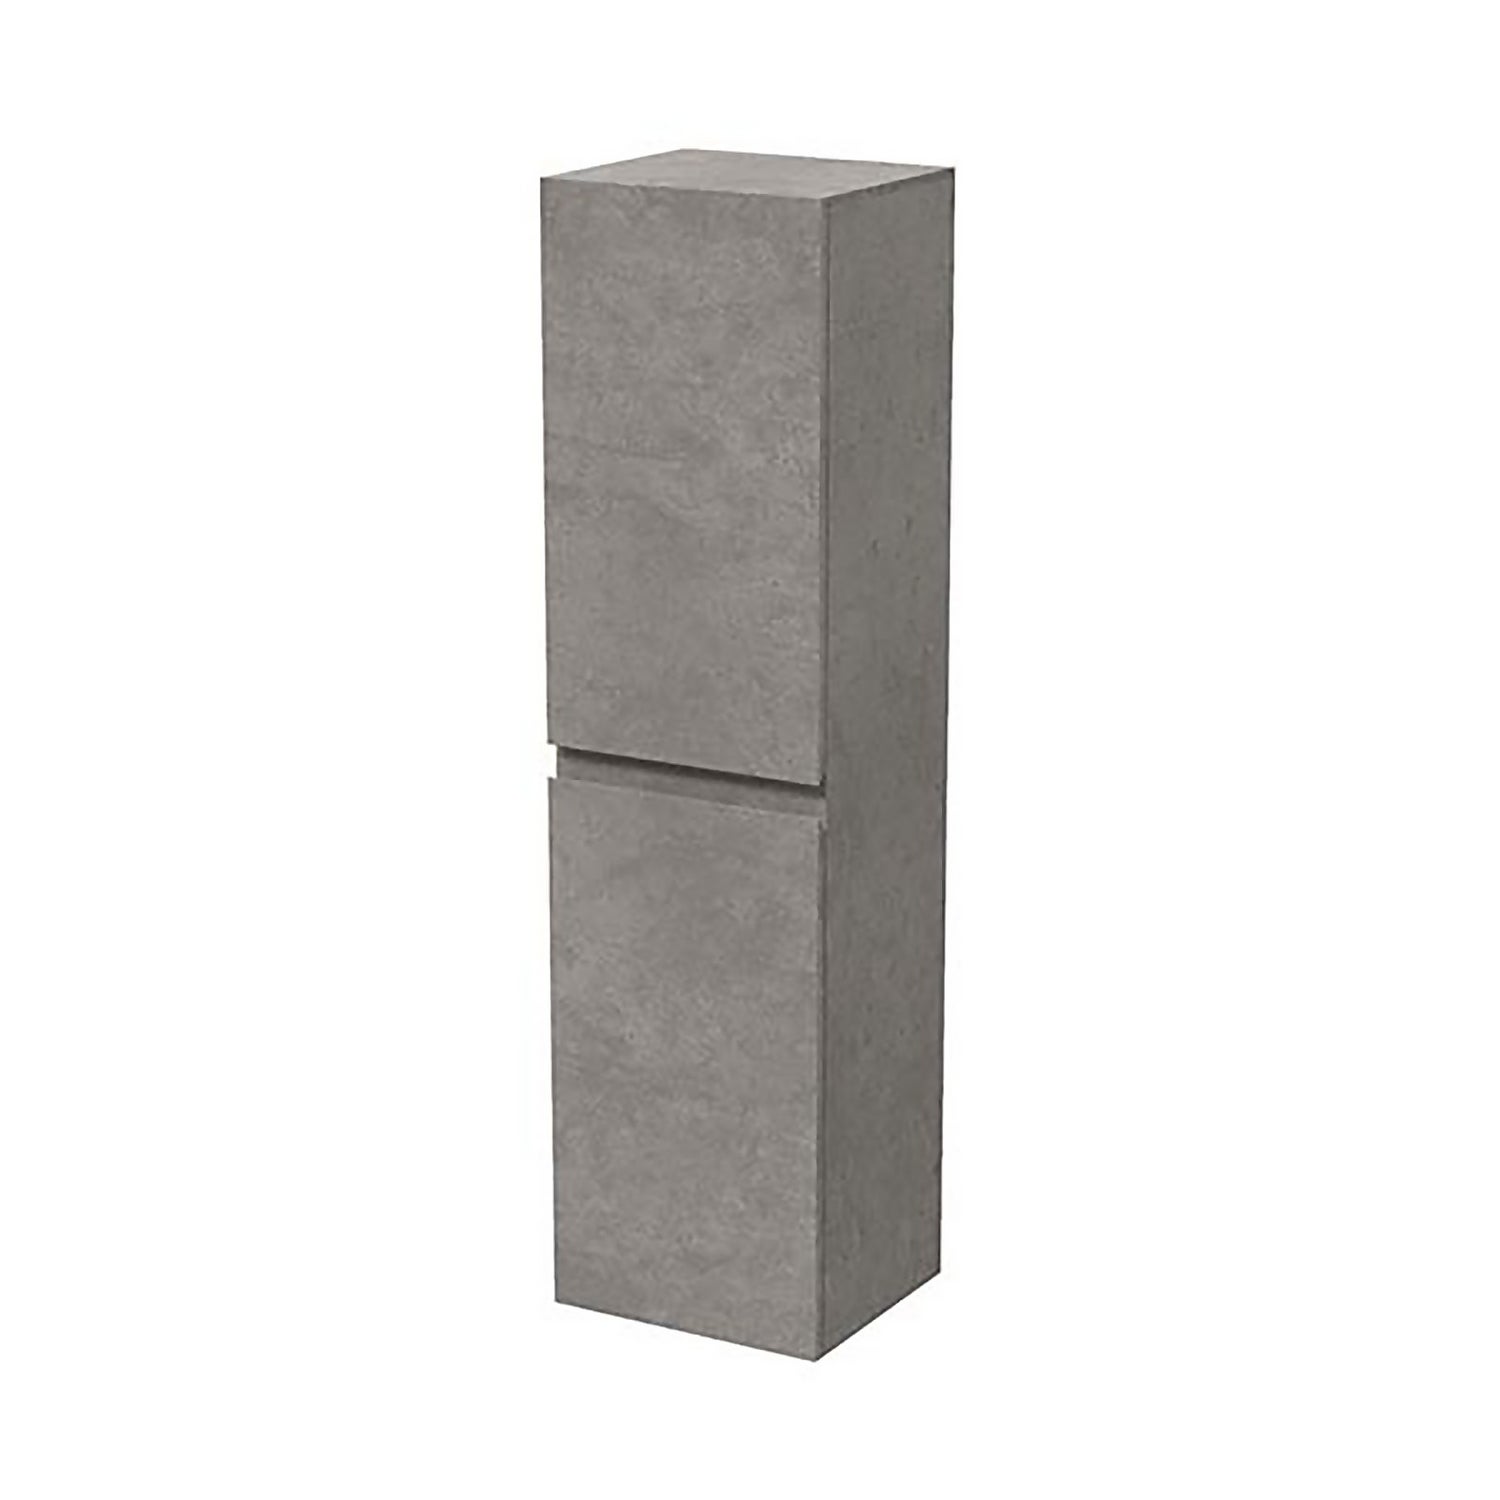 Mino Tall Wall Mounted Storage Unit - Concrete